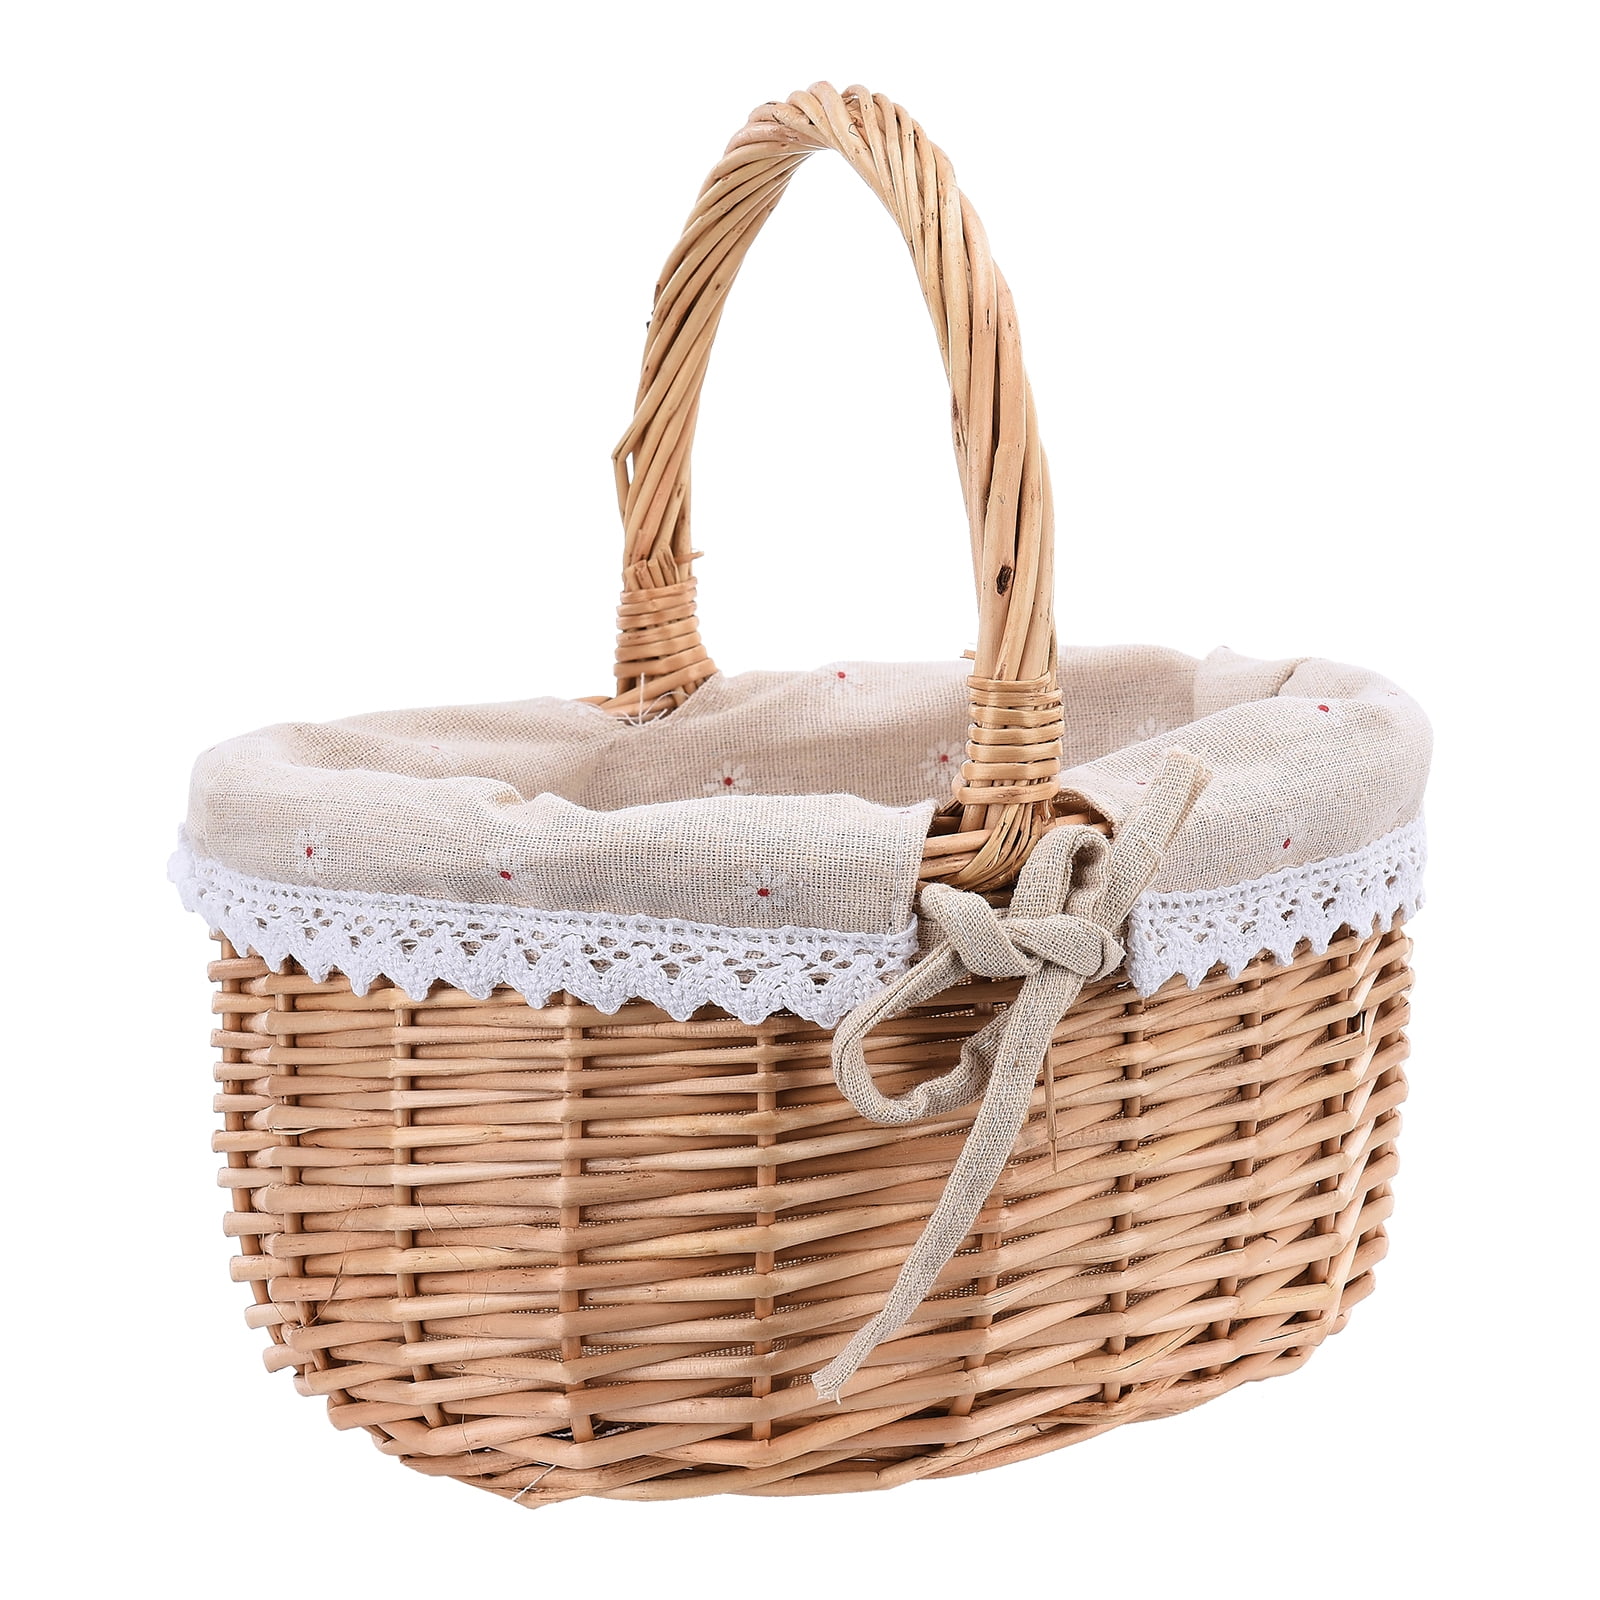 Details about   Handmade Natural Weave Basket with Handle Plant Pot Picnic Baskets Organizer 